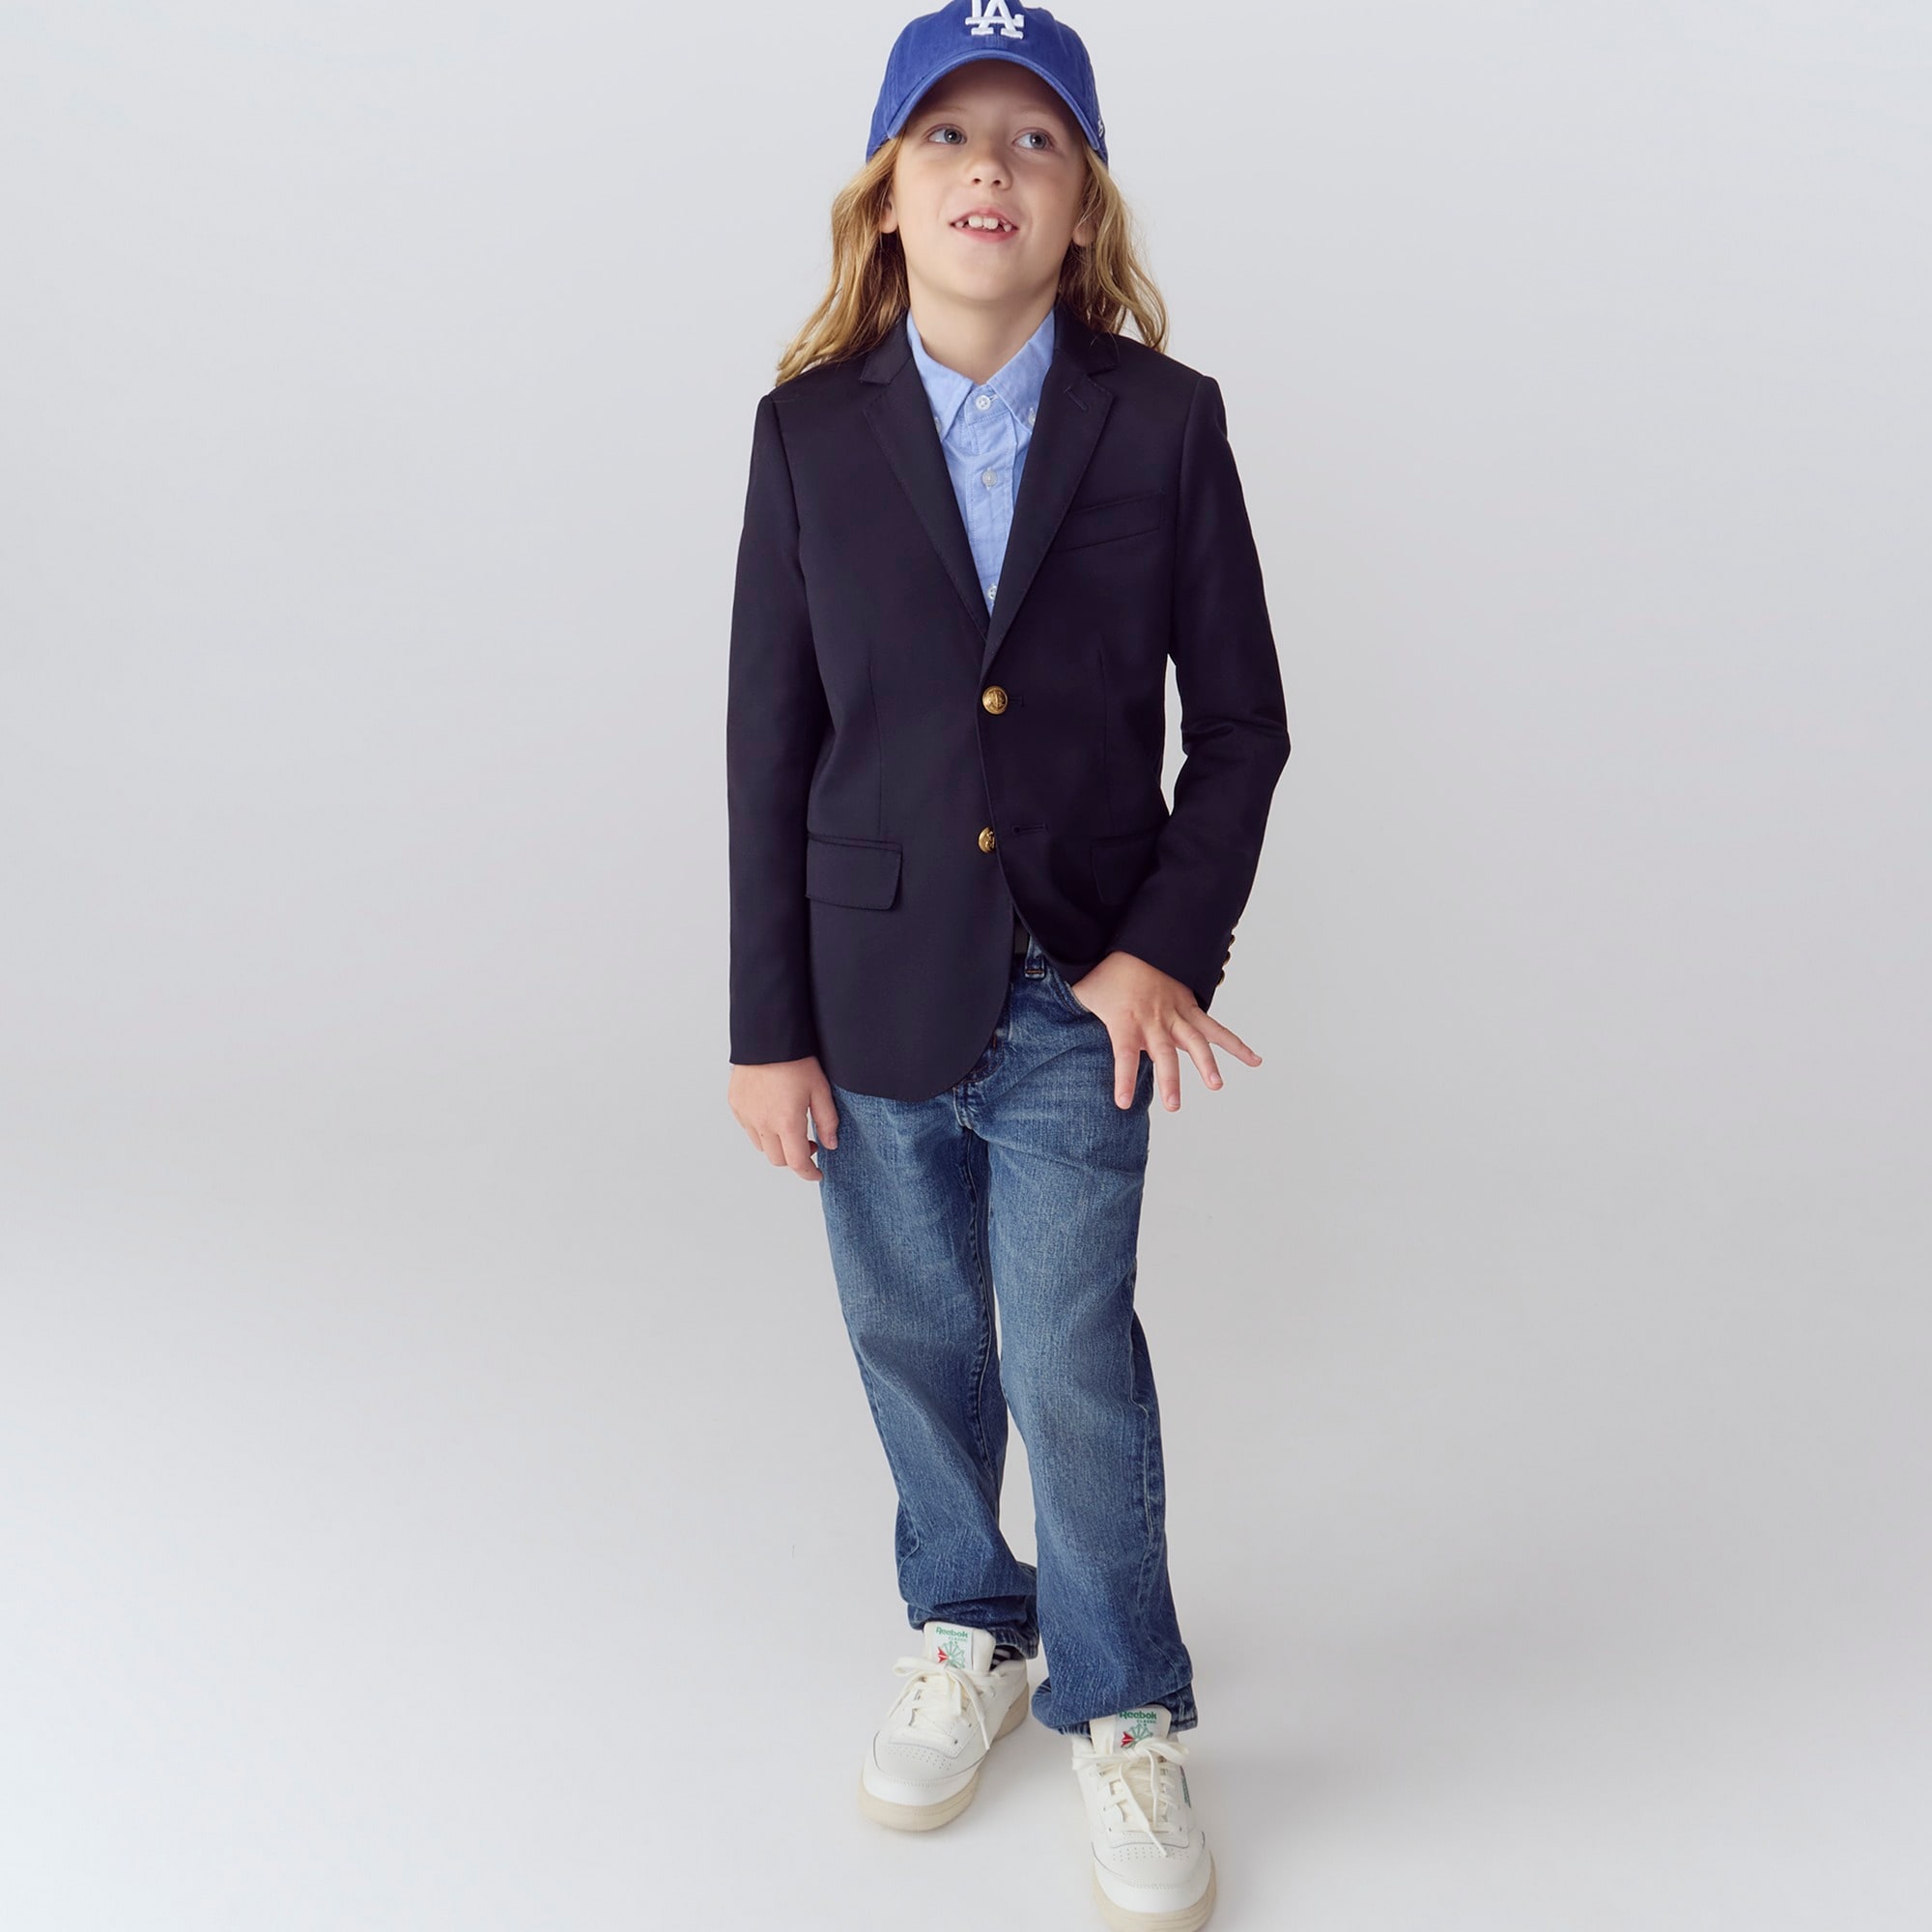  Boys' Ludlow two-button blazer in navy wool blend